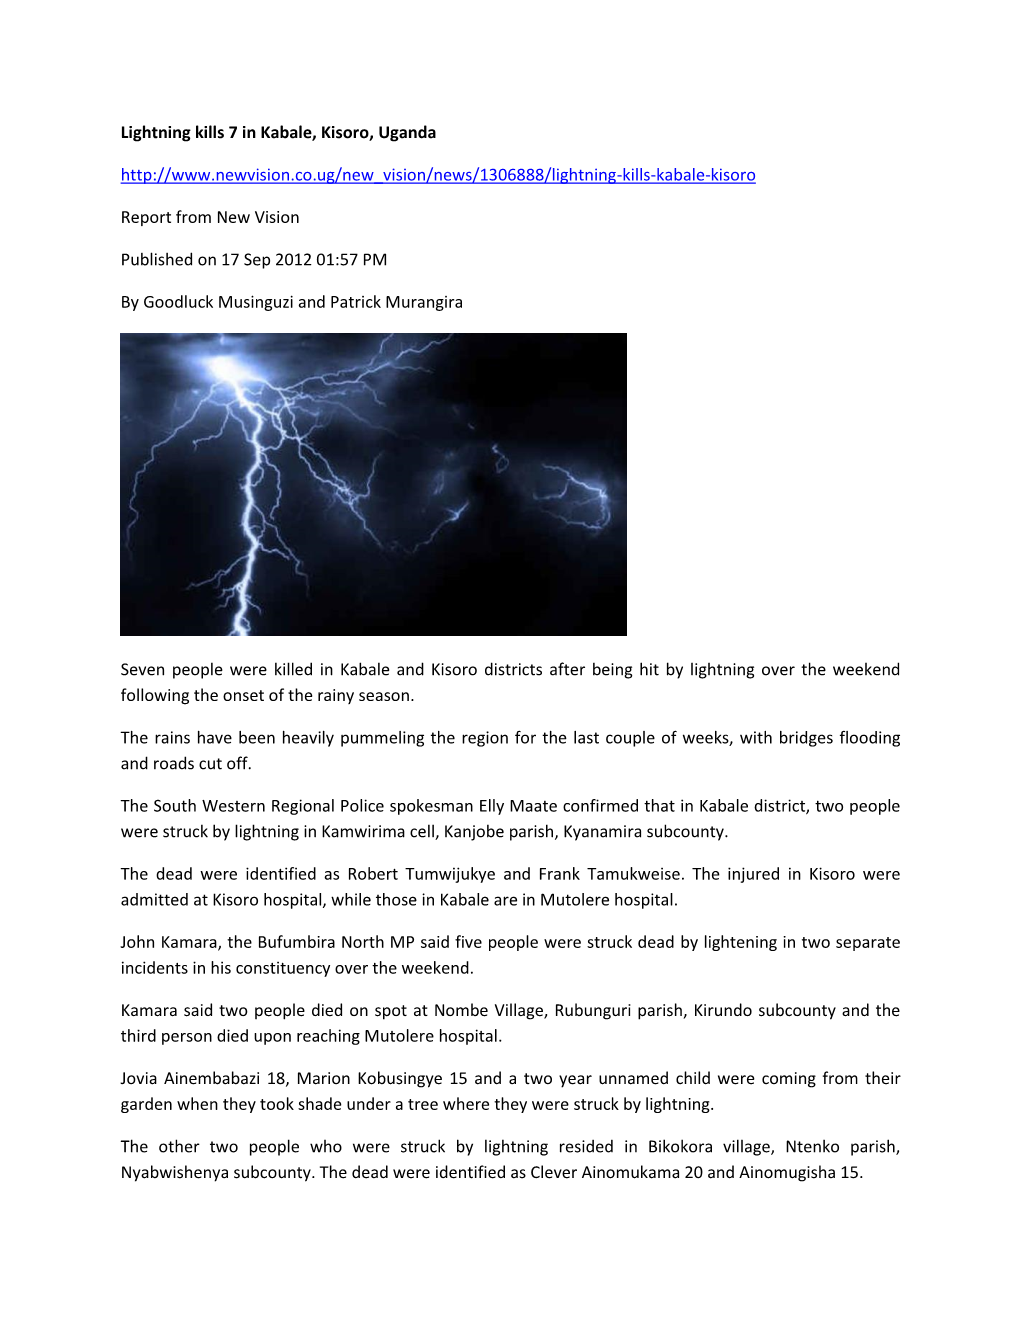 Lightning Kills 7 in Kabale, Kisoro, Uganda